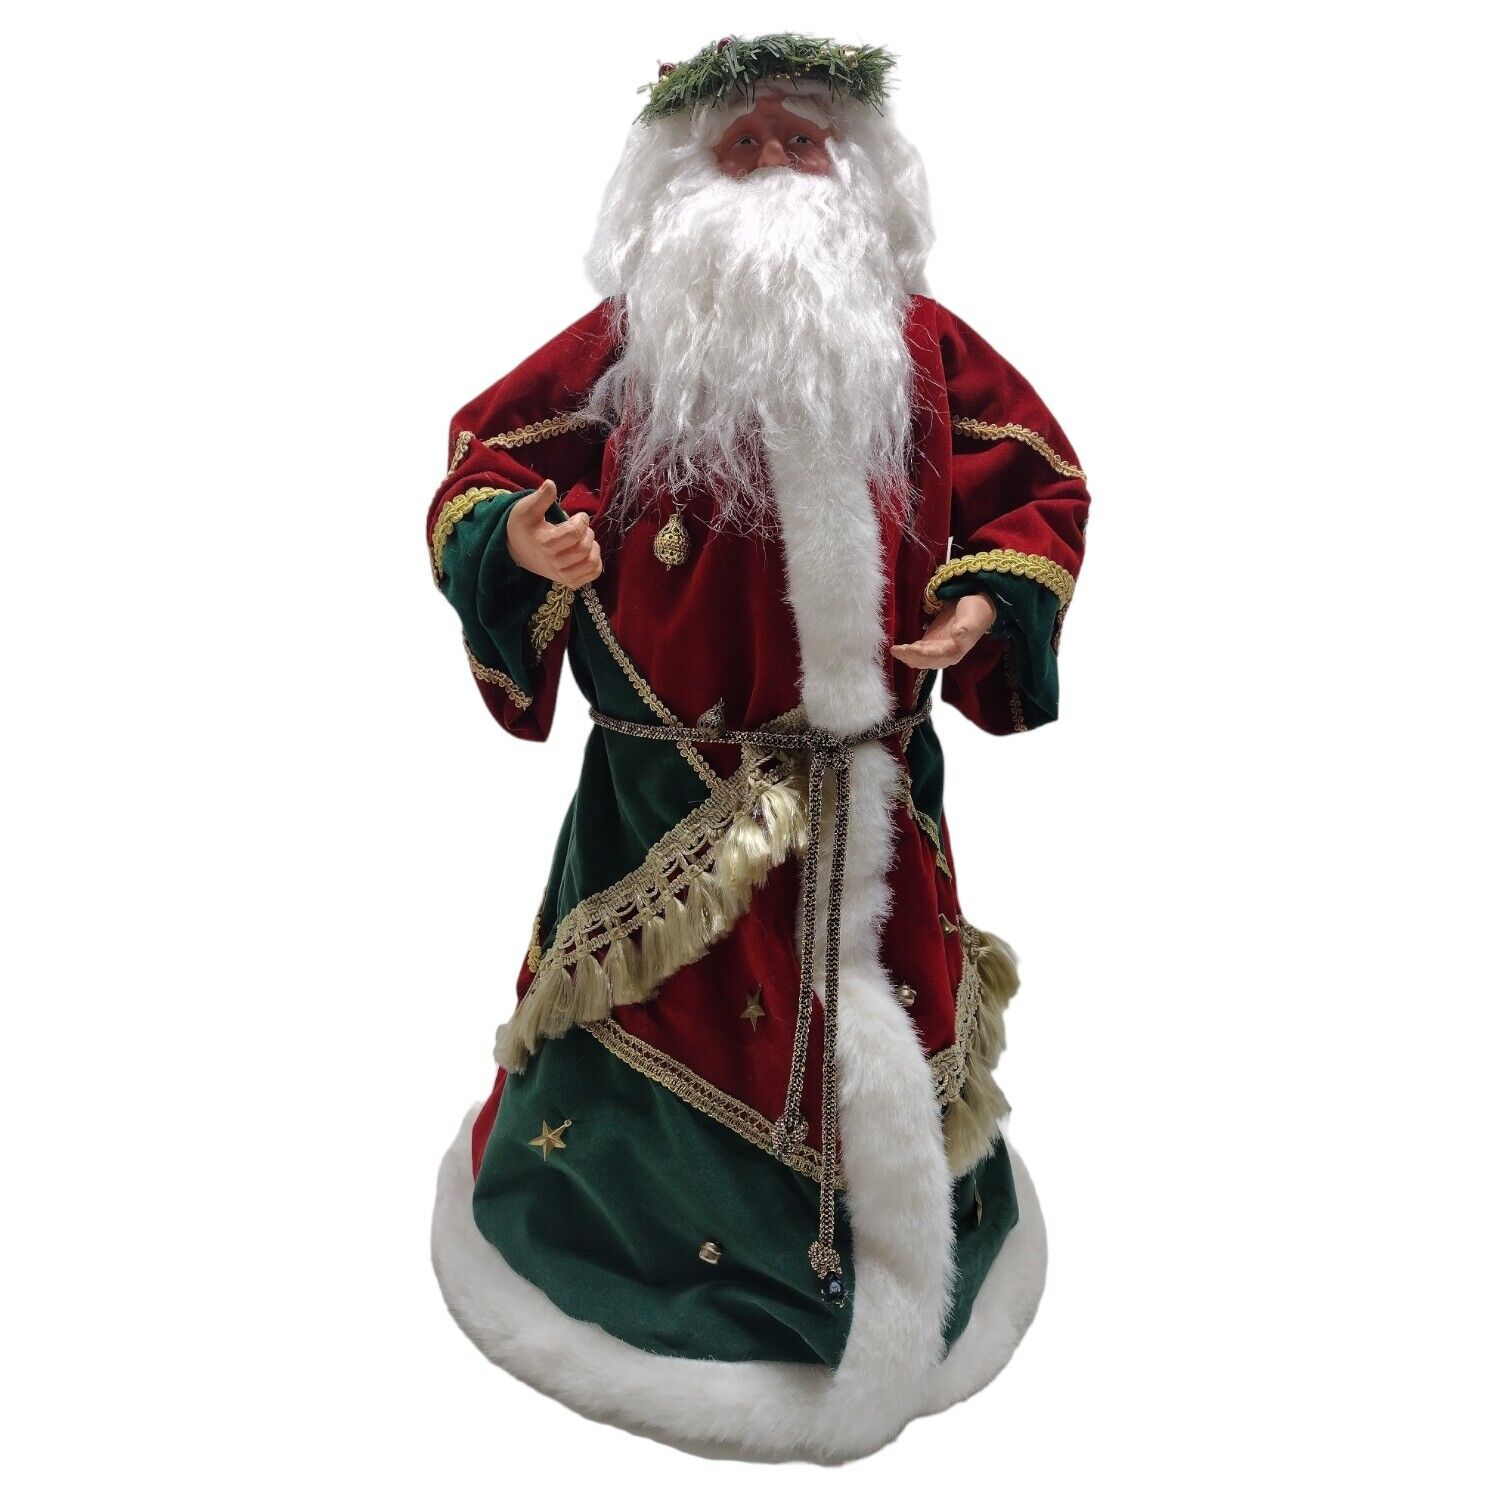 Santa Costco 24” Santa Claus Statue Christmas Decoration Figure gift